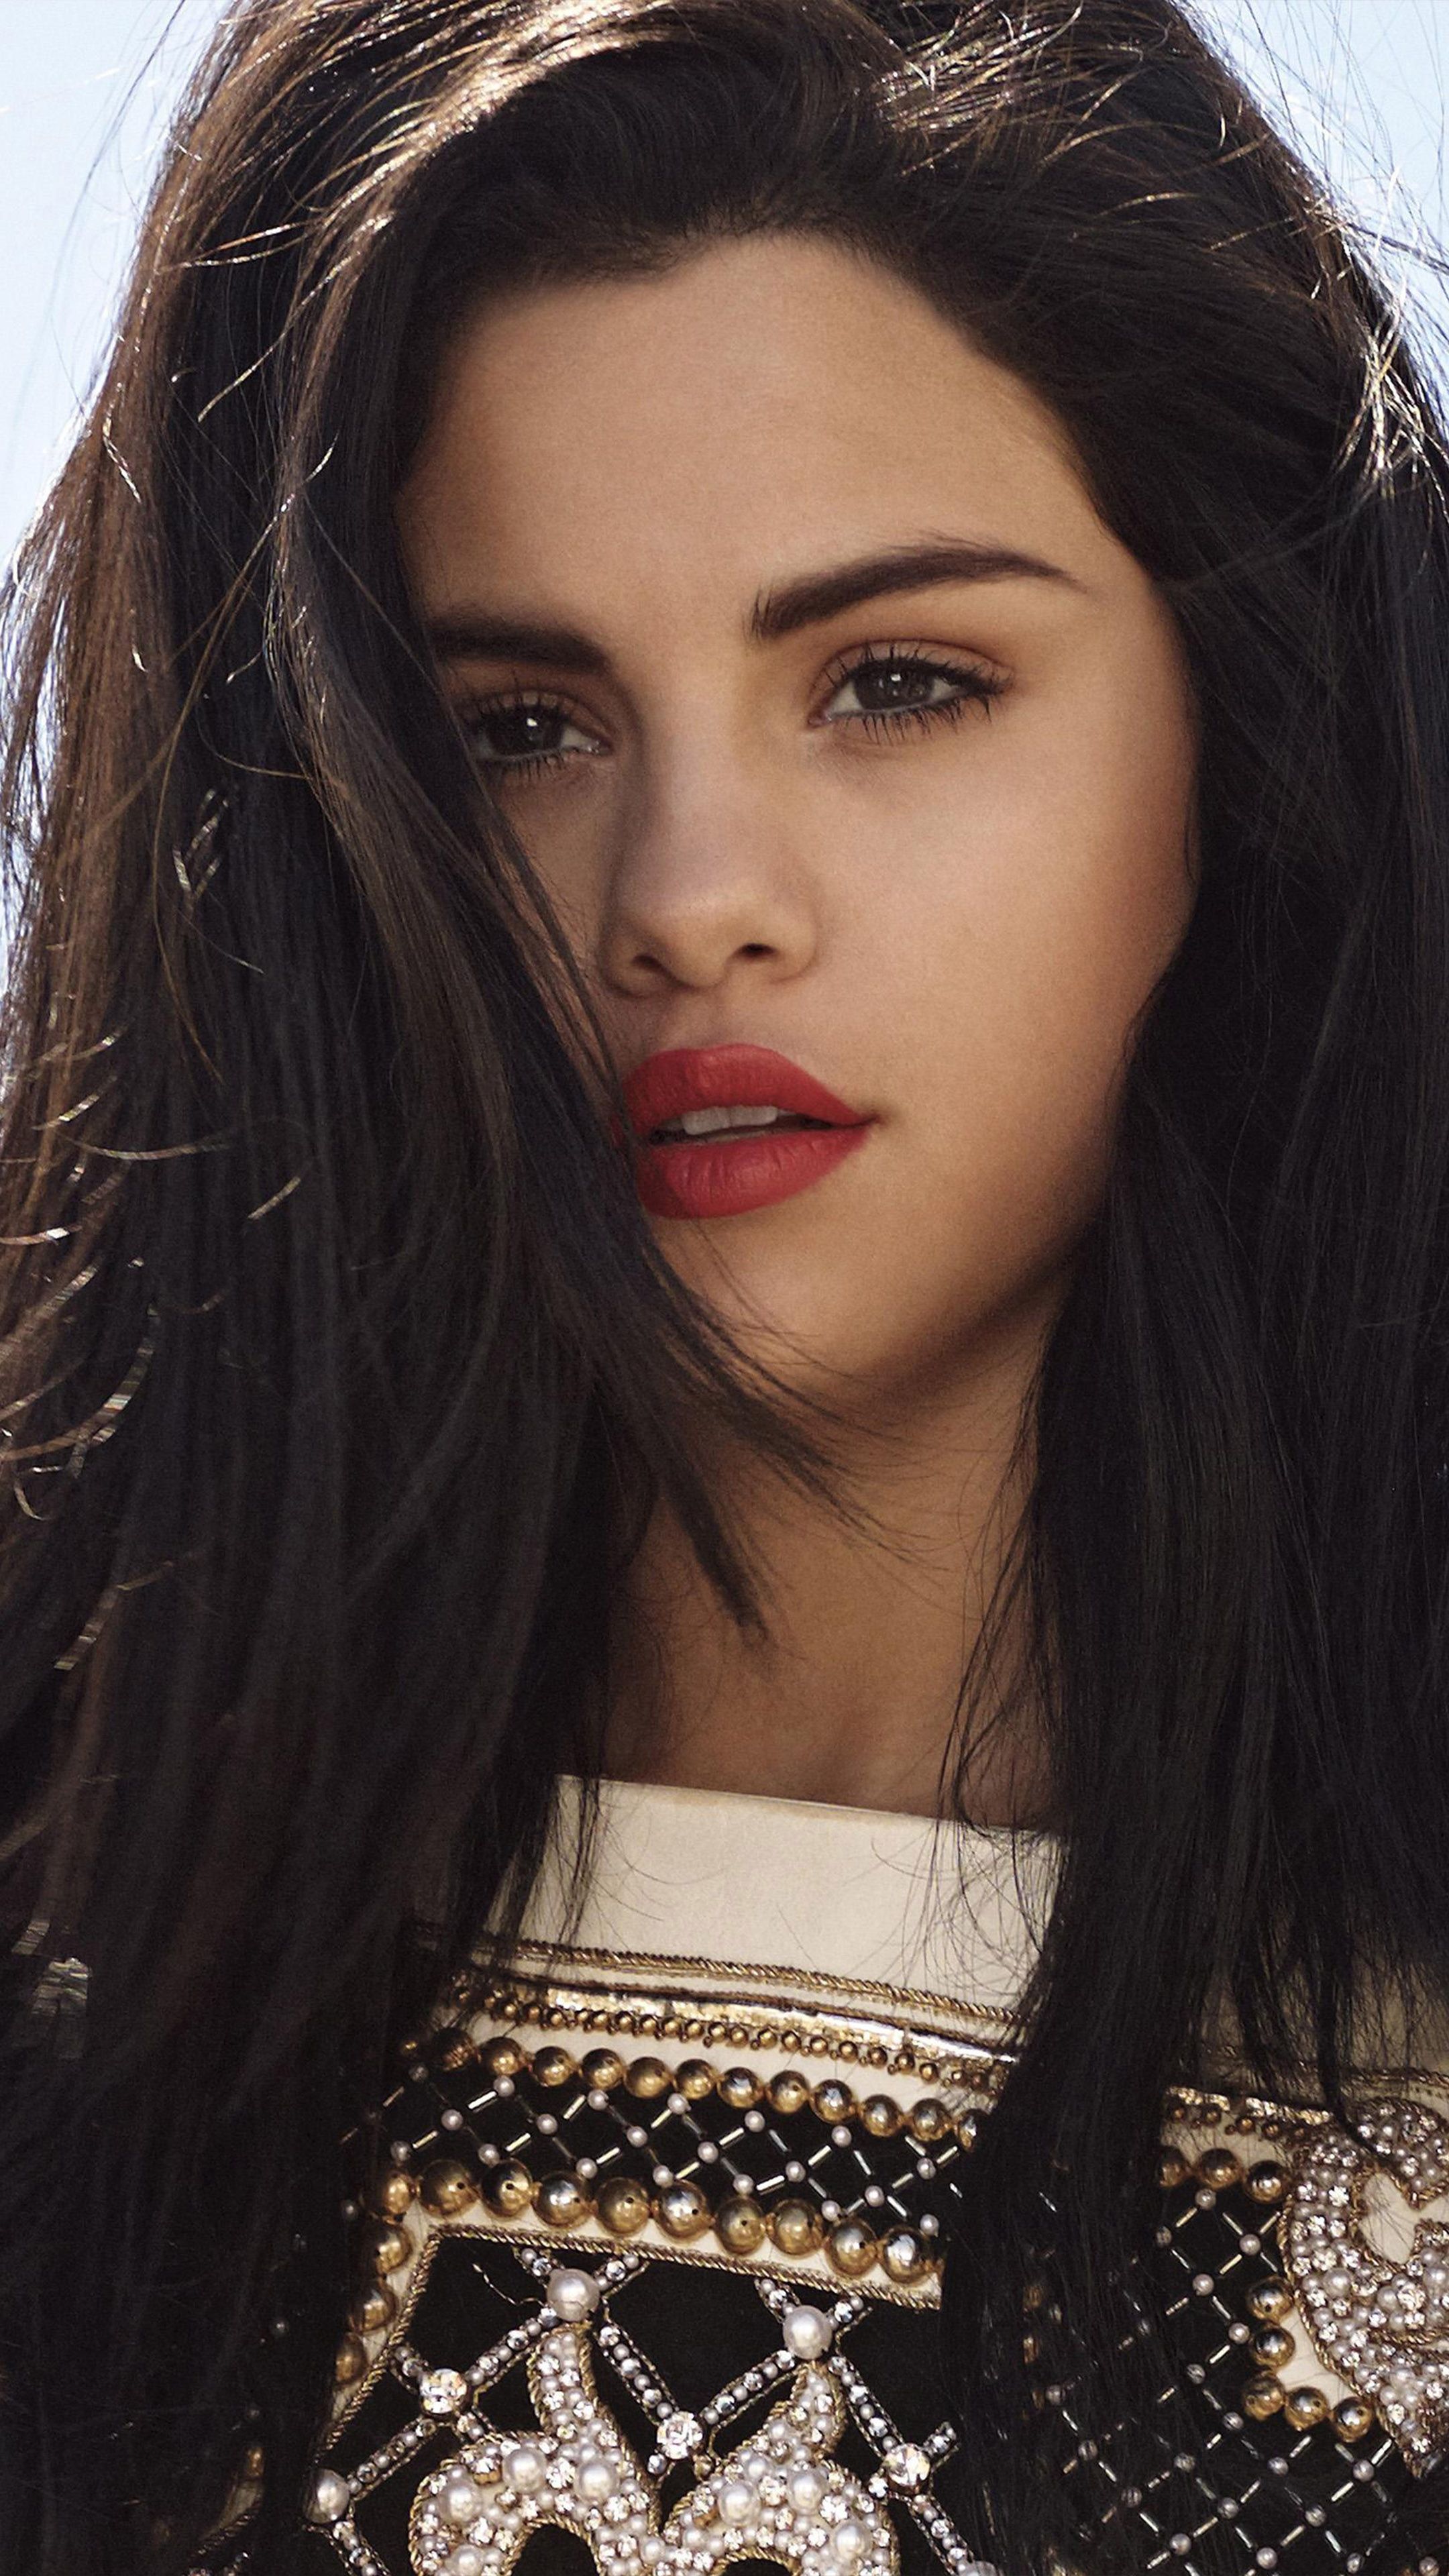 Beautiful Singer Song Writer Selena Gomez 4K Ultra HD Mobile Wallpaper